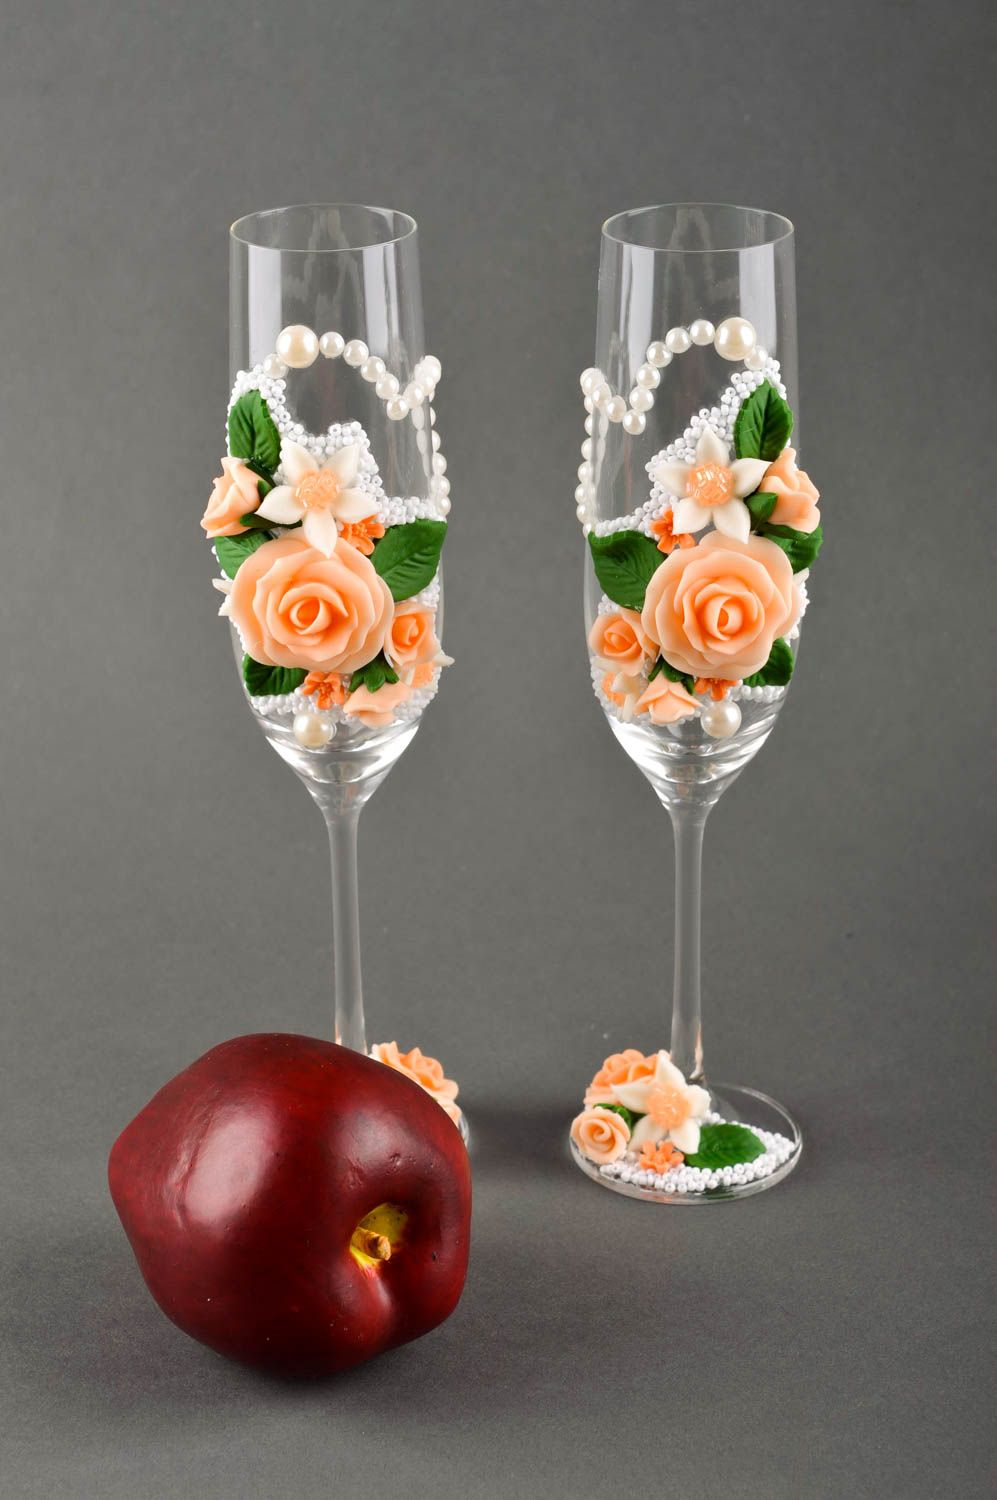 Unusual handmade wine glass champagne glass table setting stemware ideas photo 1